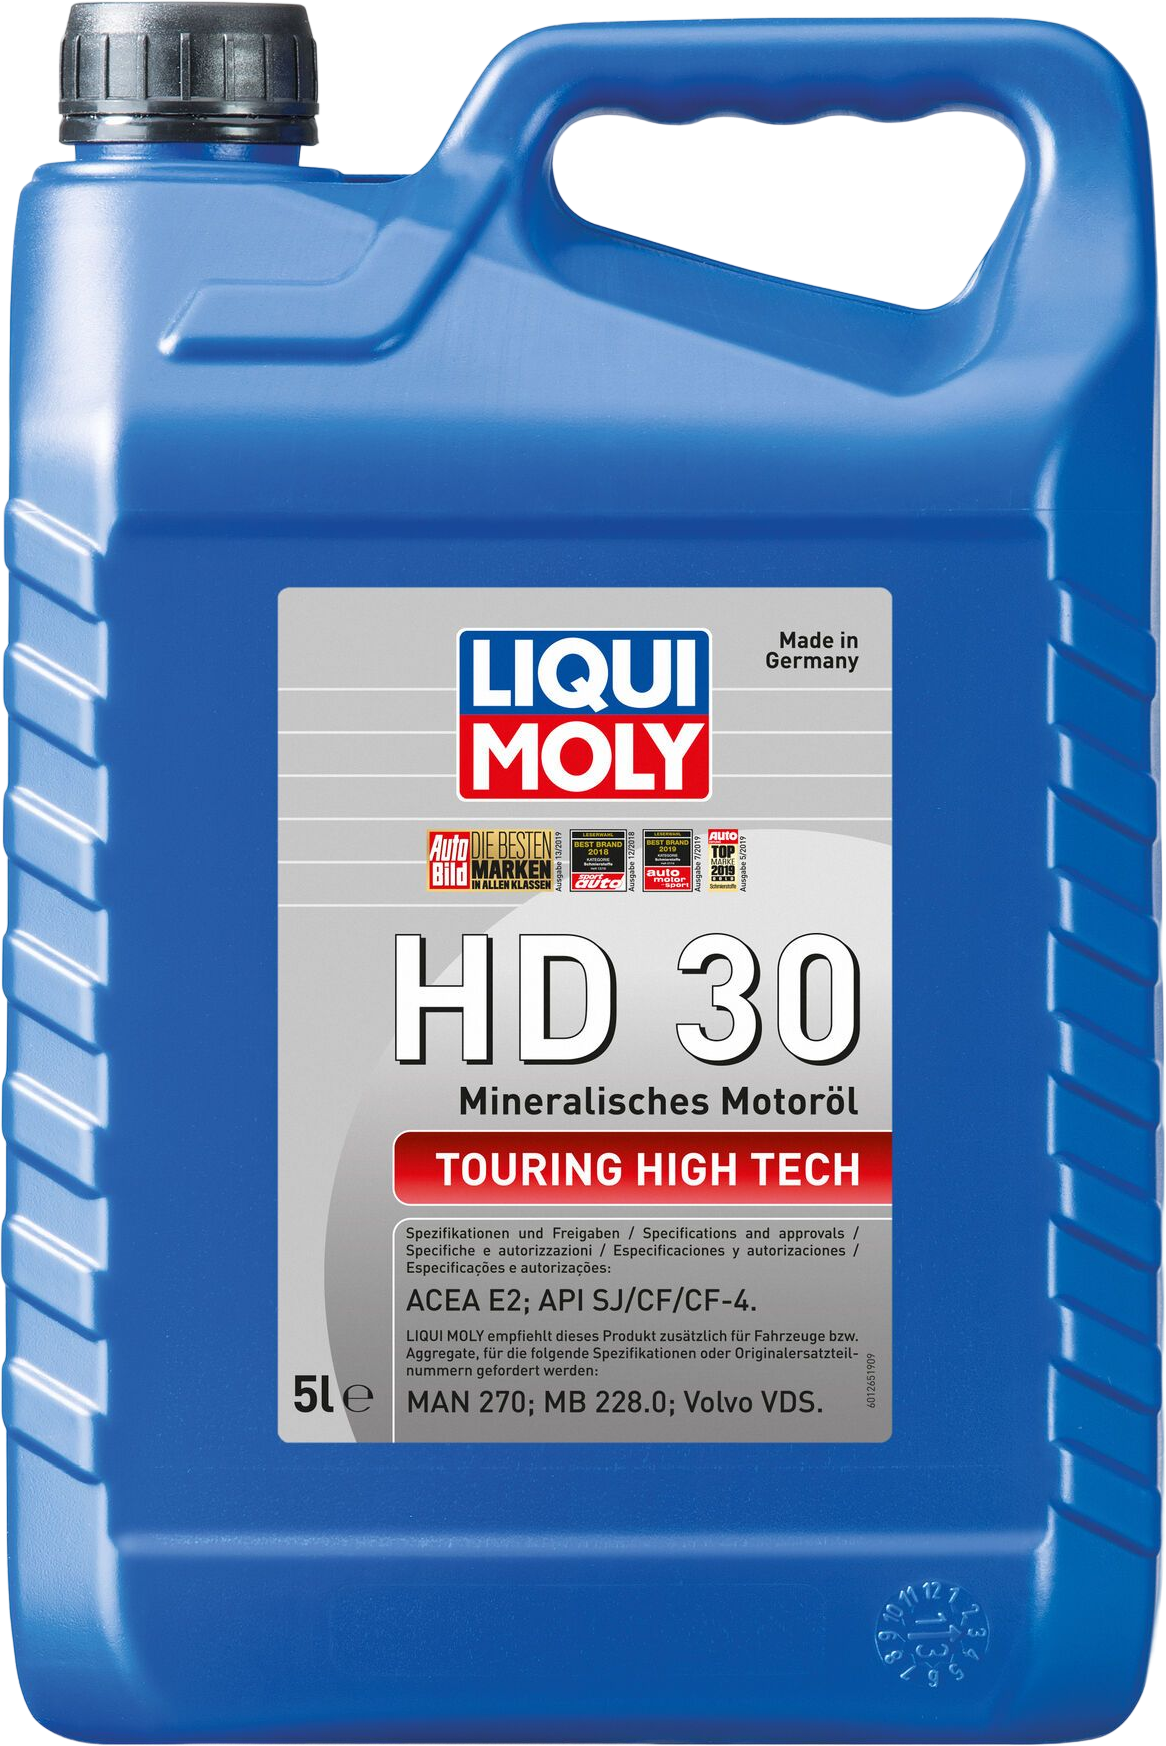 Liqui Moly Touring High Tech HD 30, 5 lt